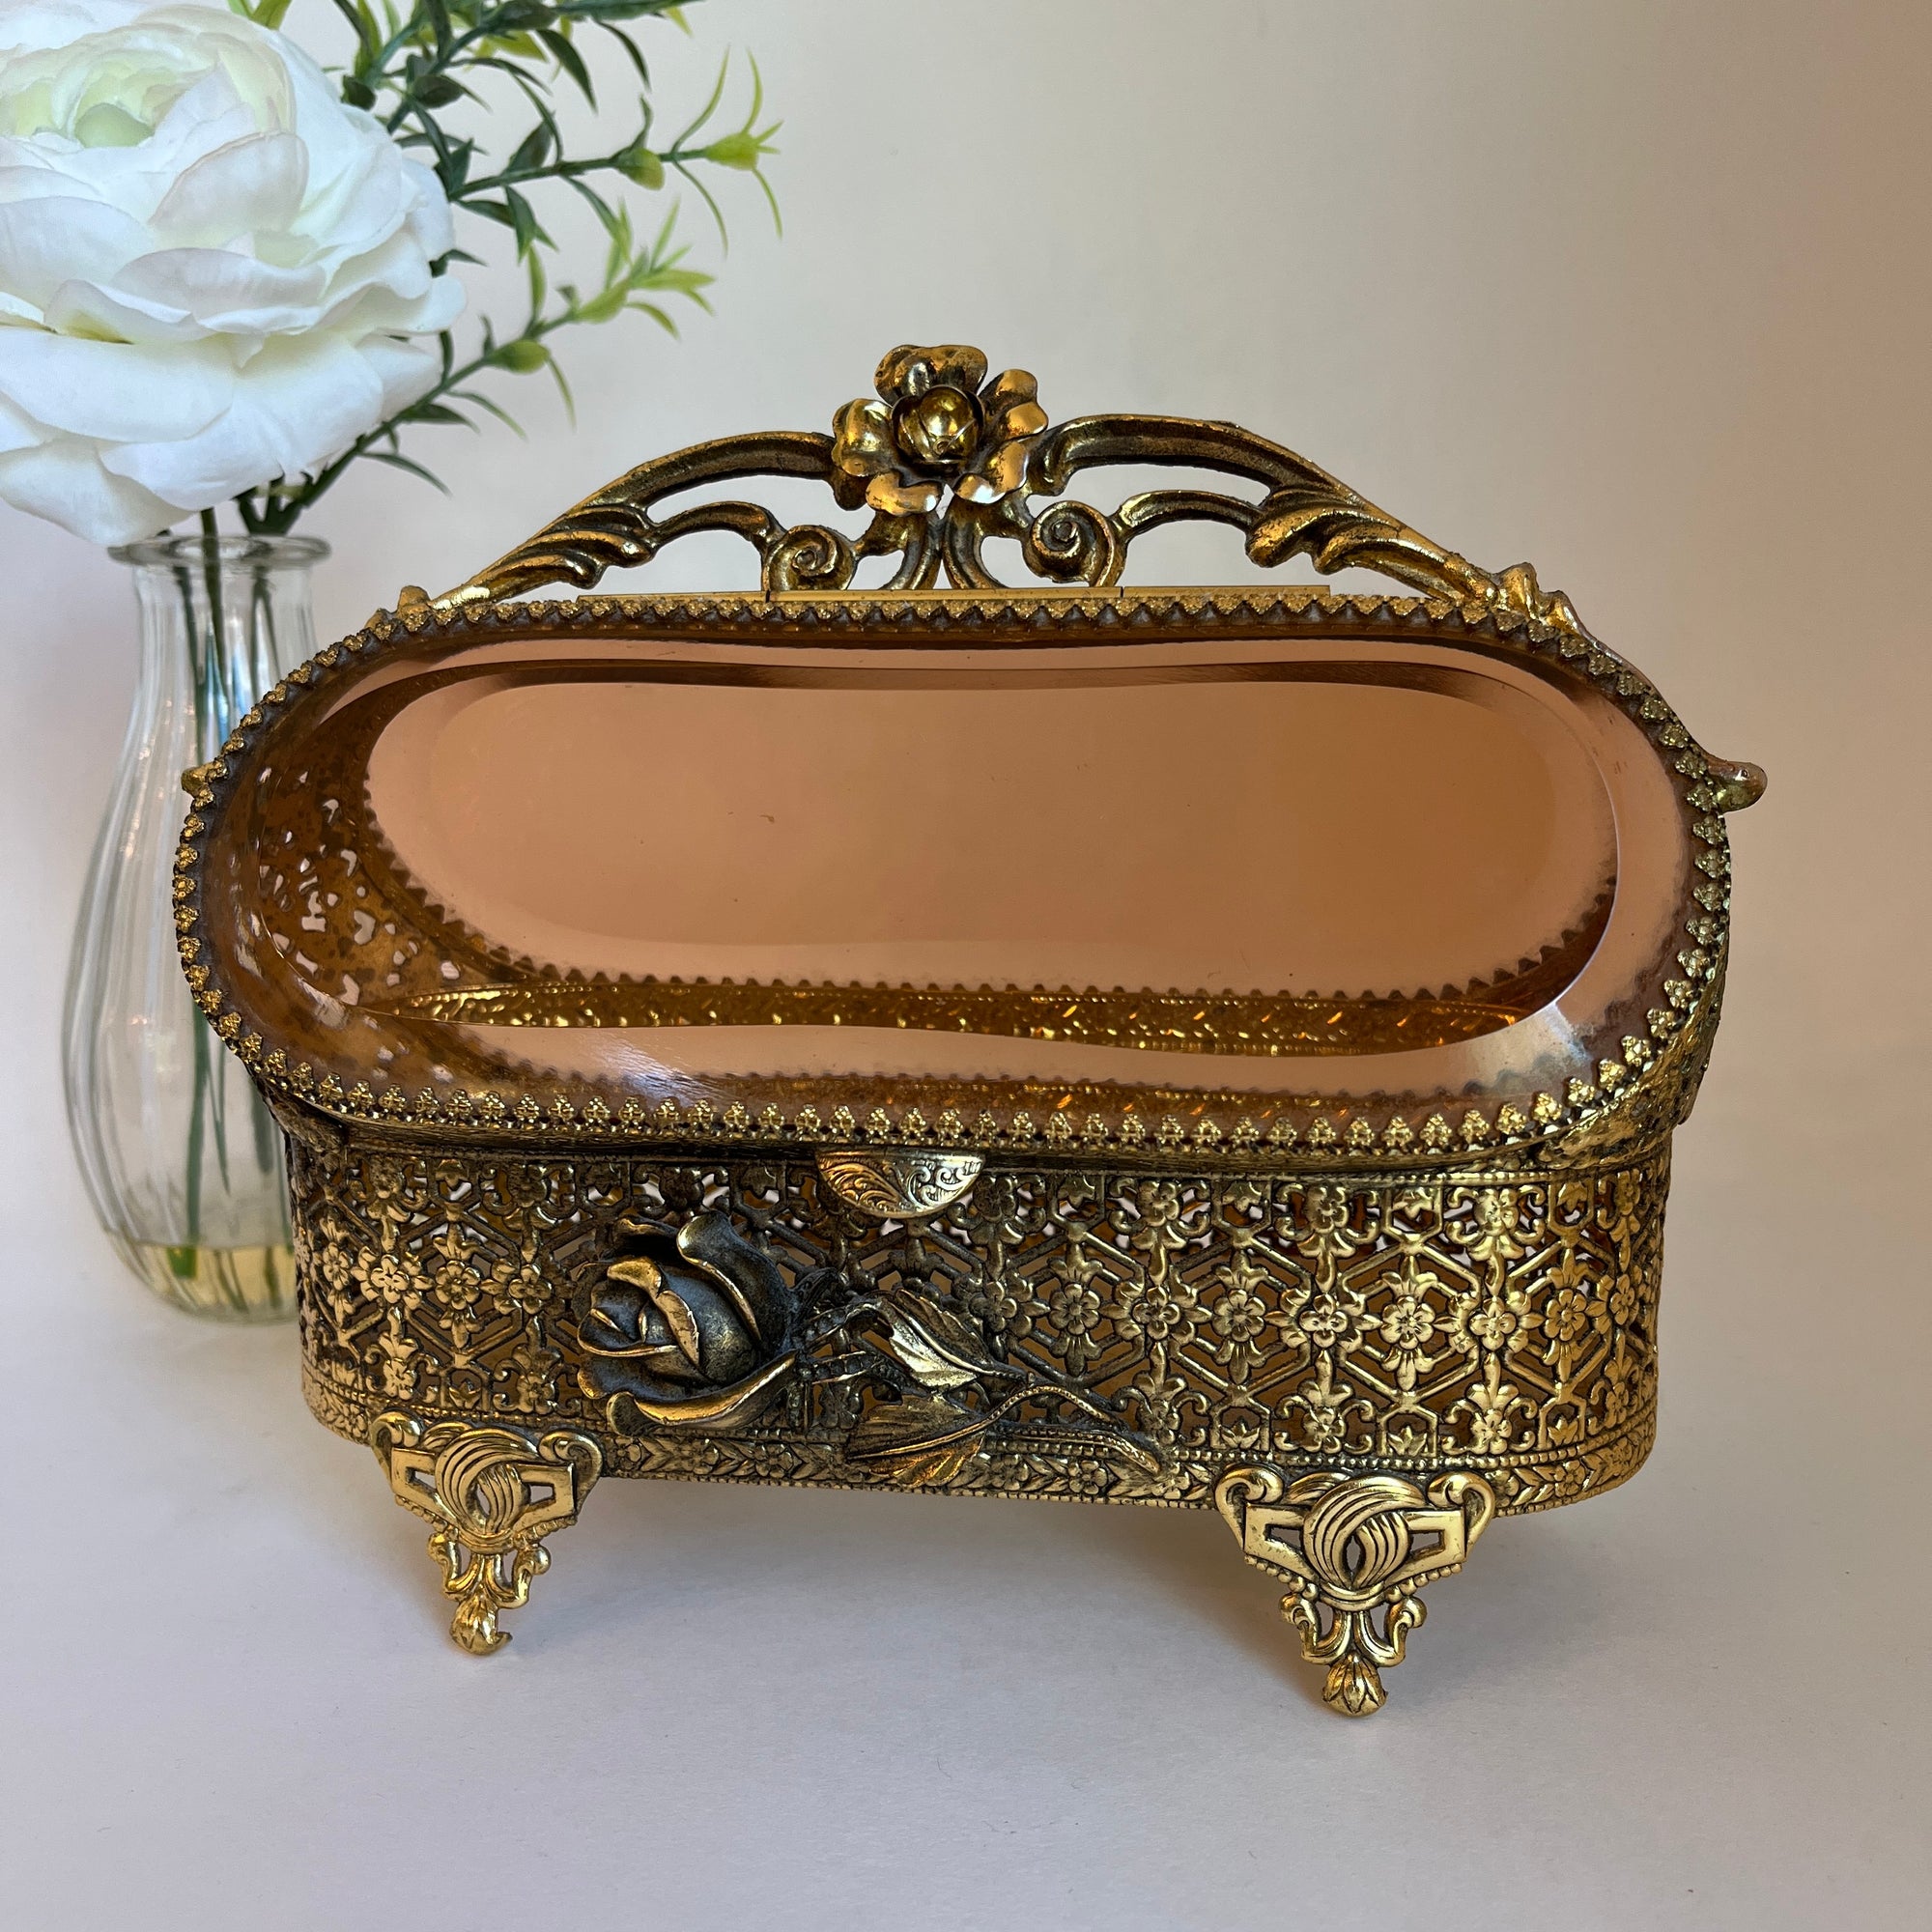 Ornate Bijoux (Jewelry or Trinket) Ormolu Casket with Rose Toned Bevelled Glass